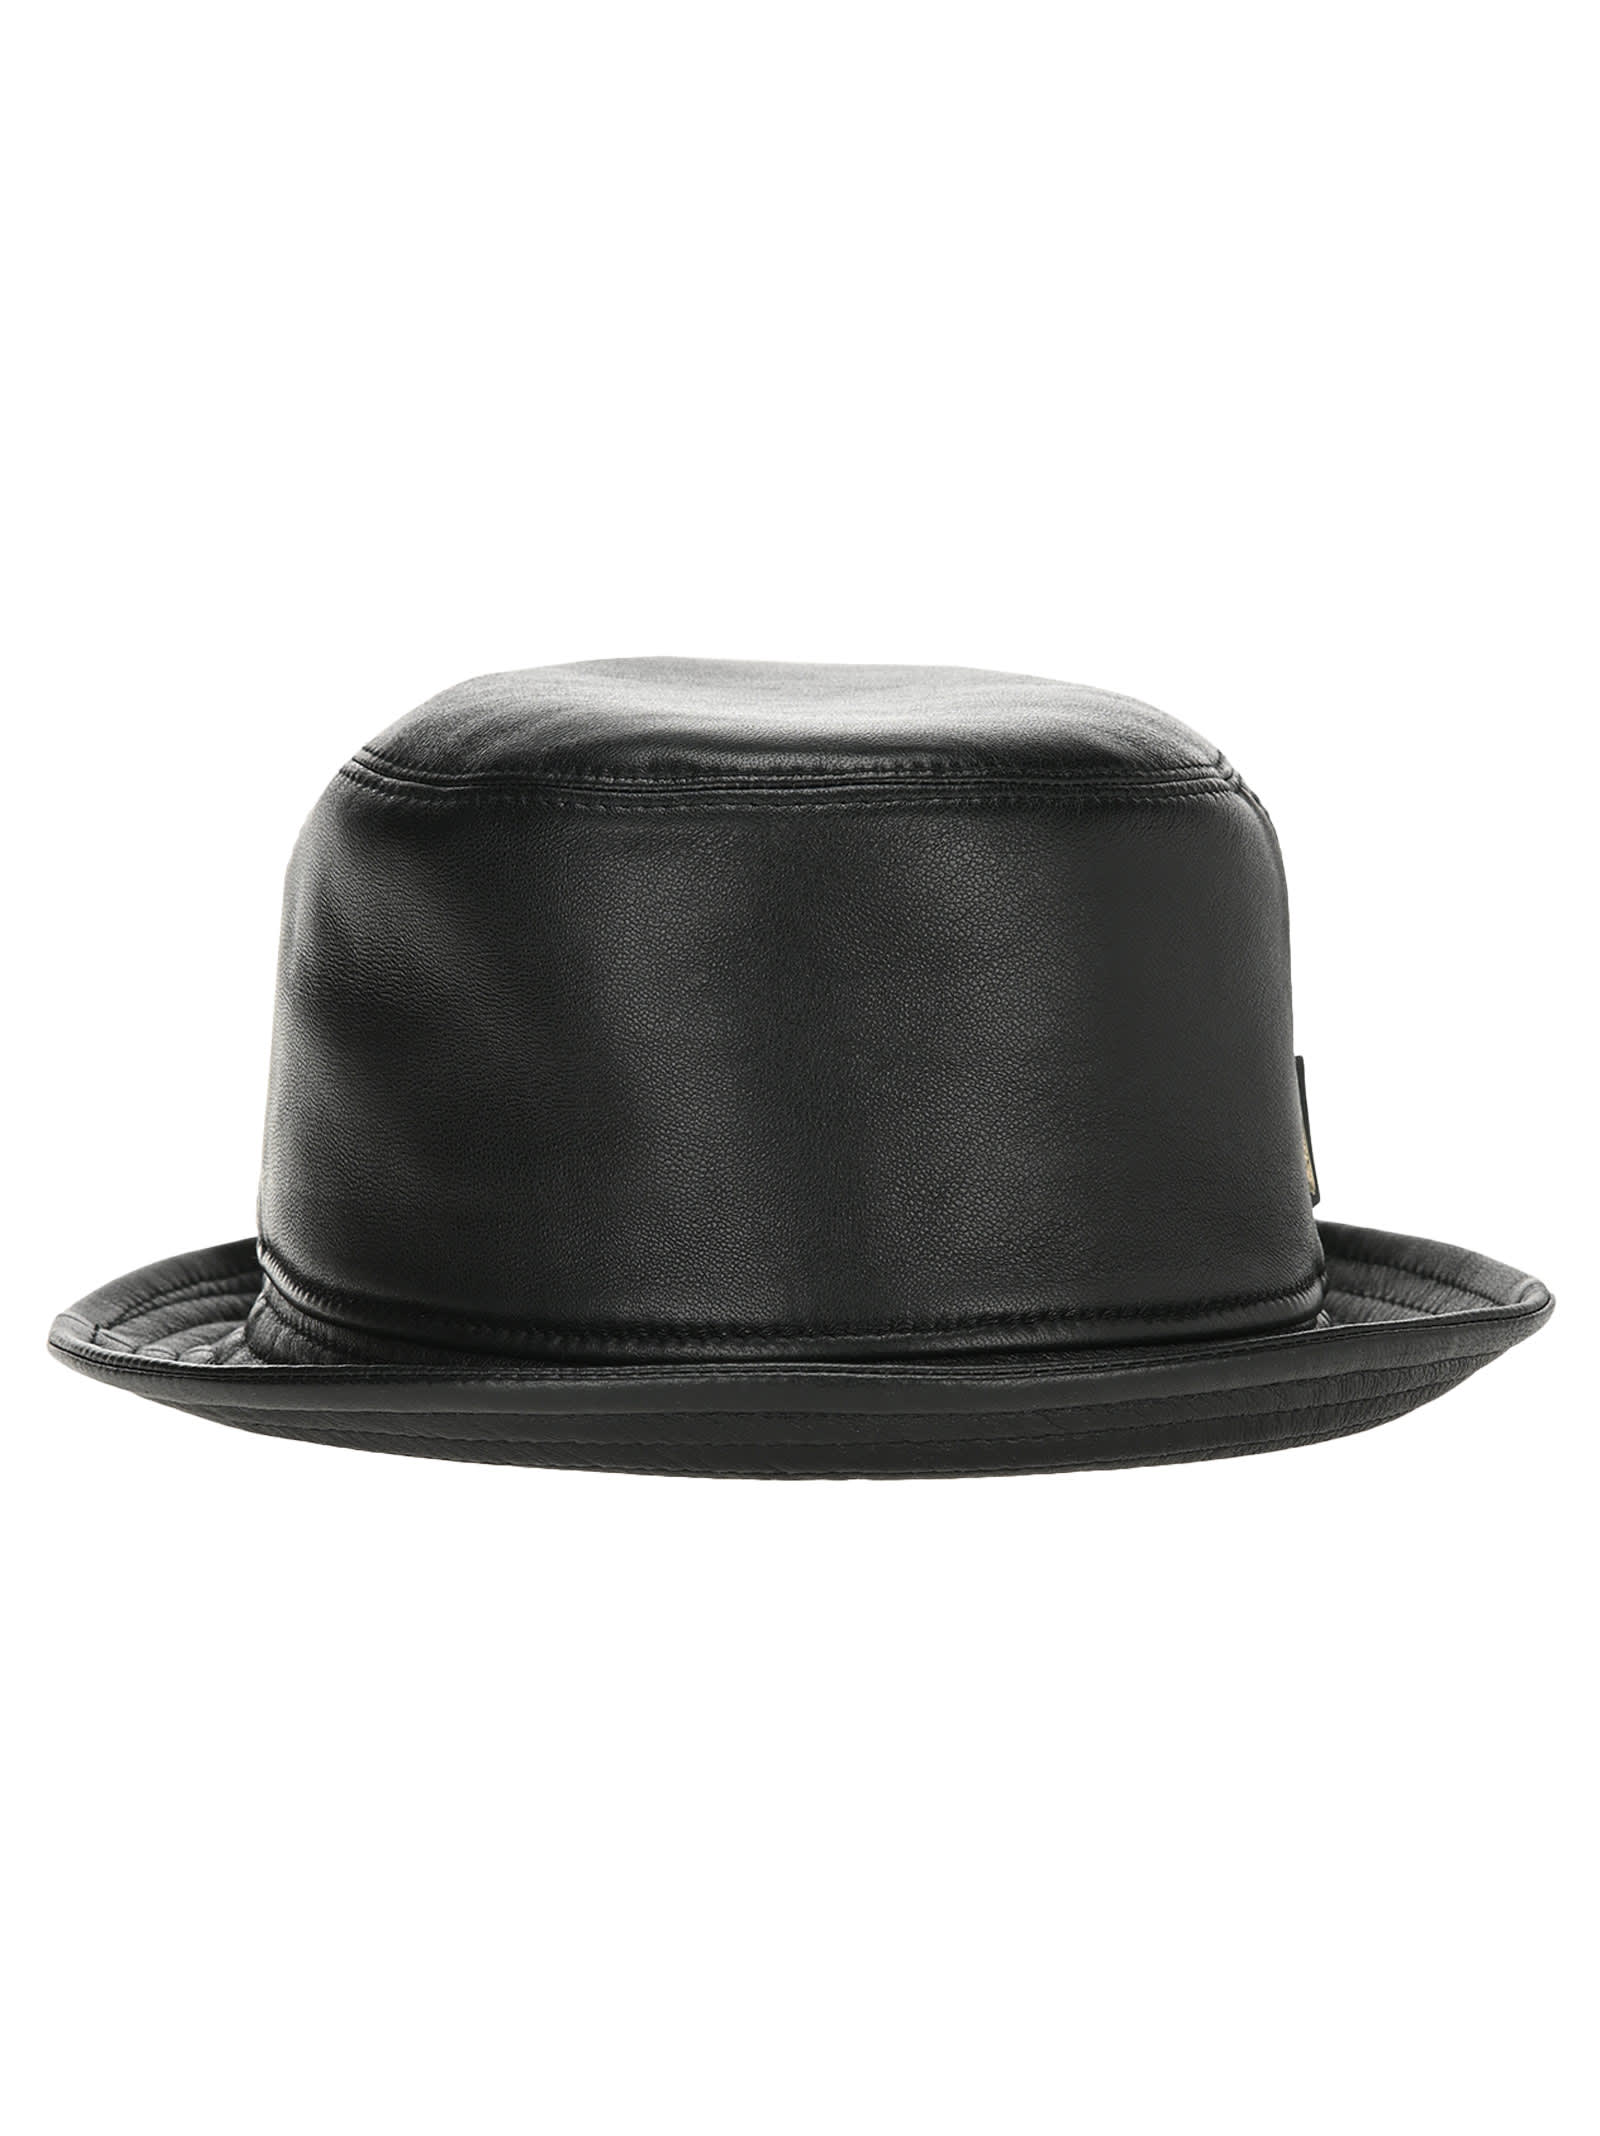 Borsalino Leather Hat In Black